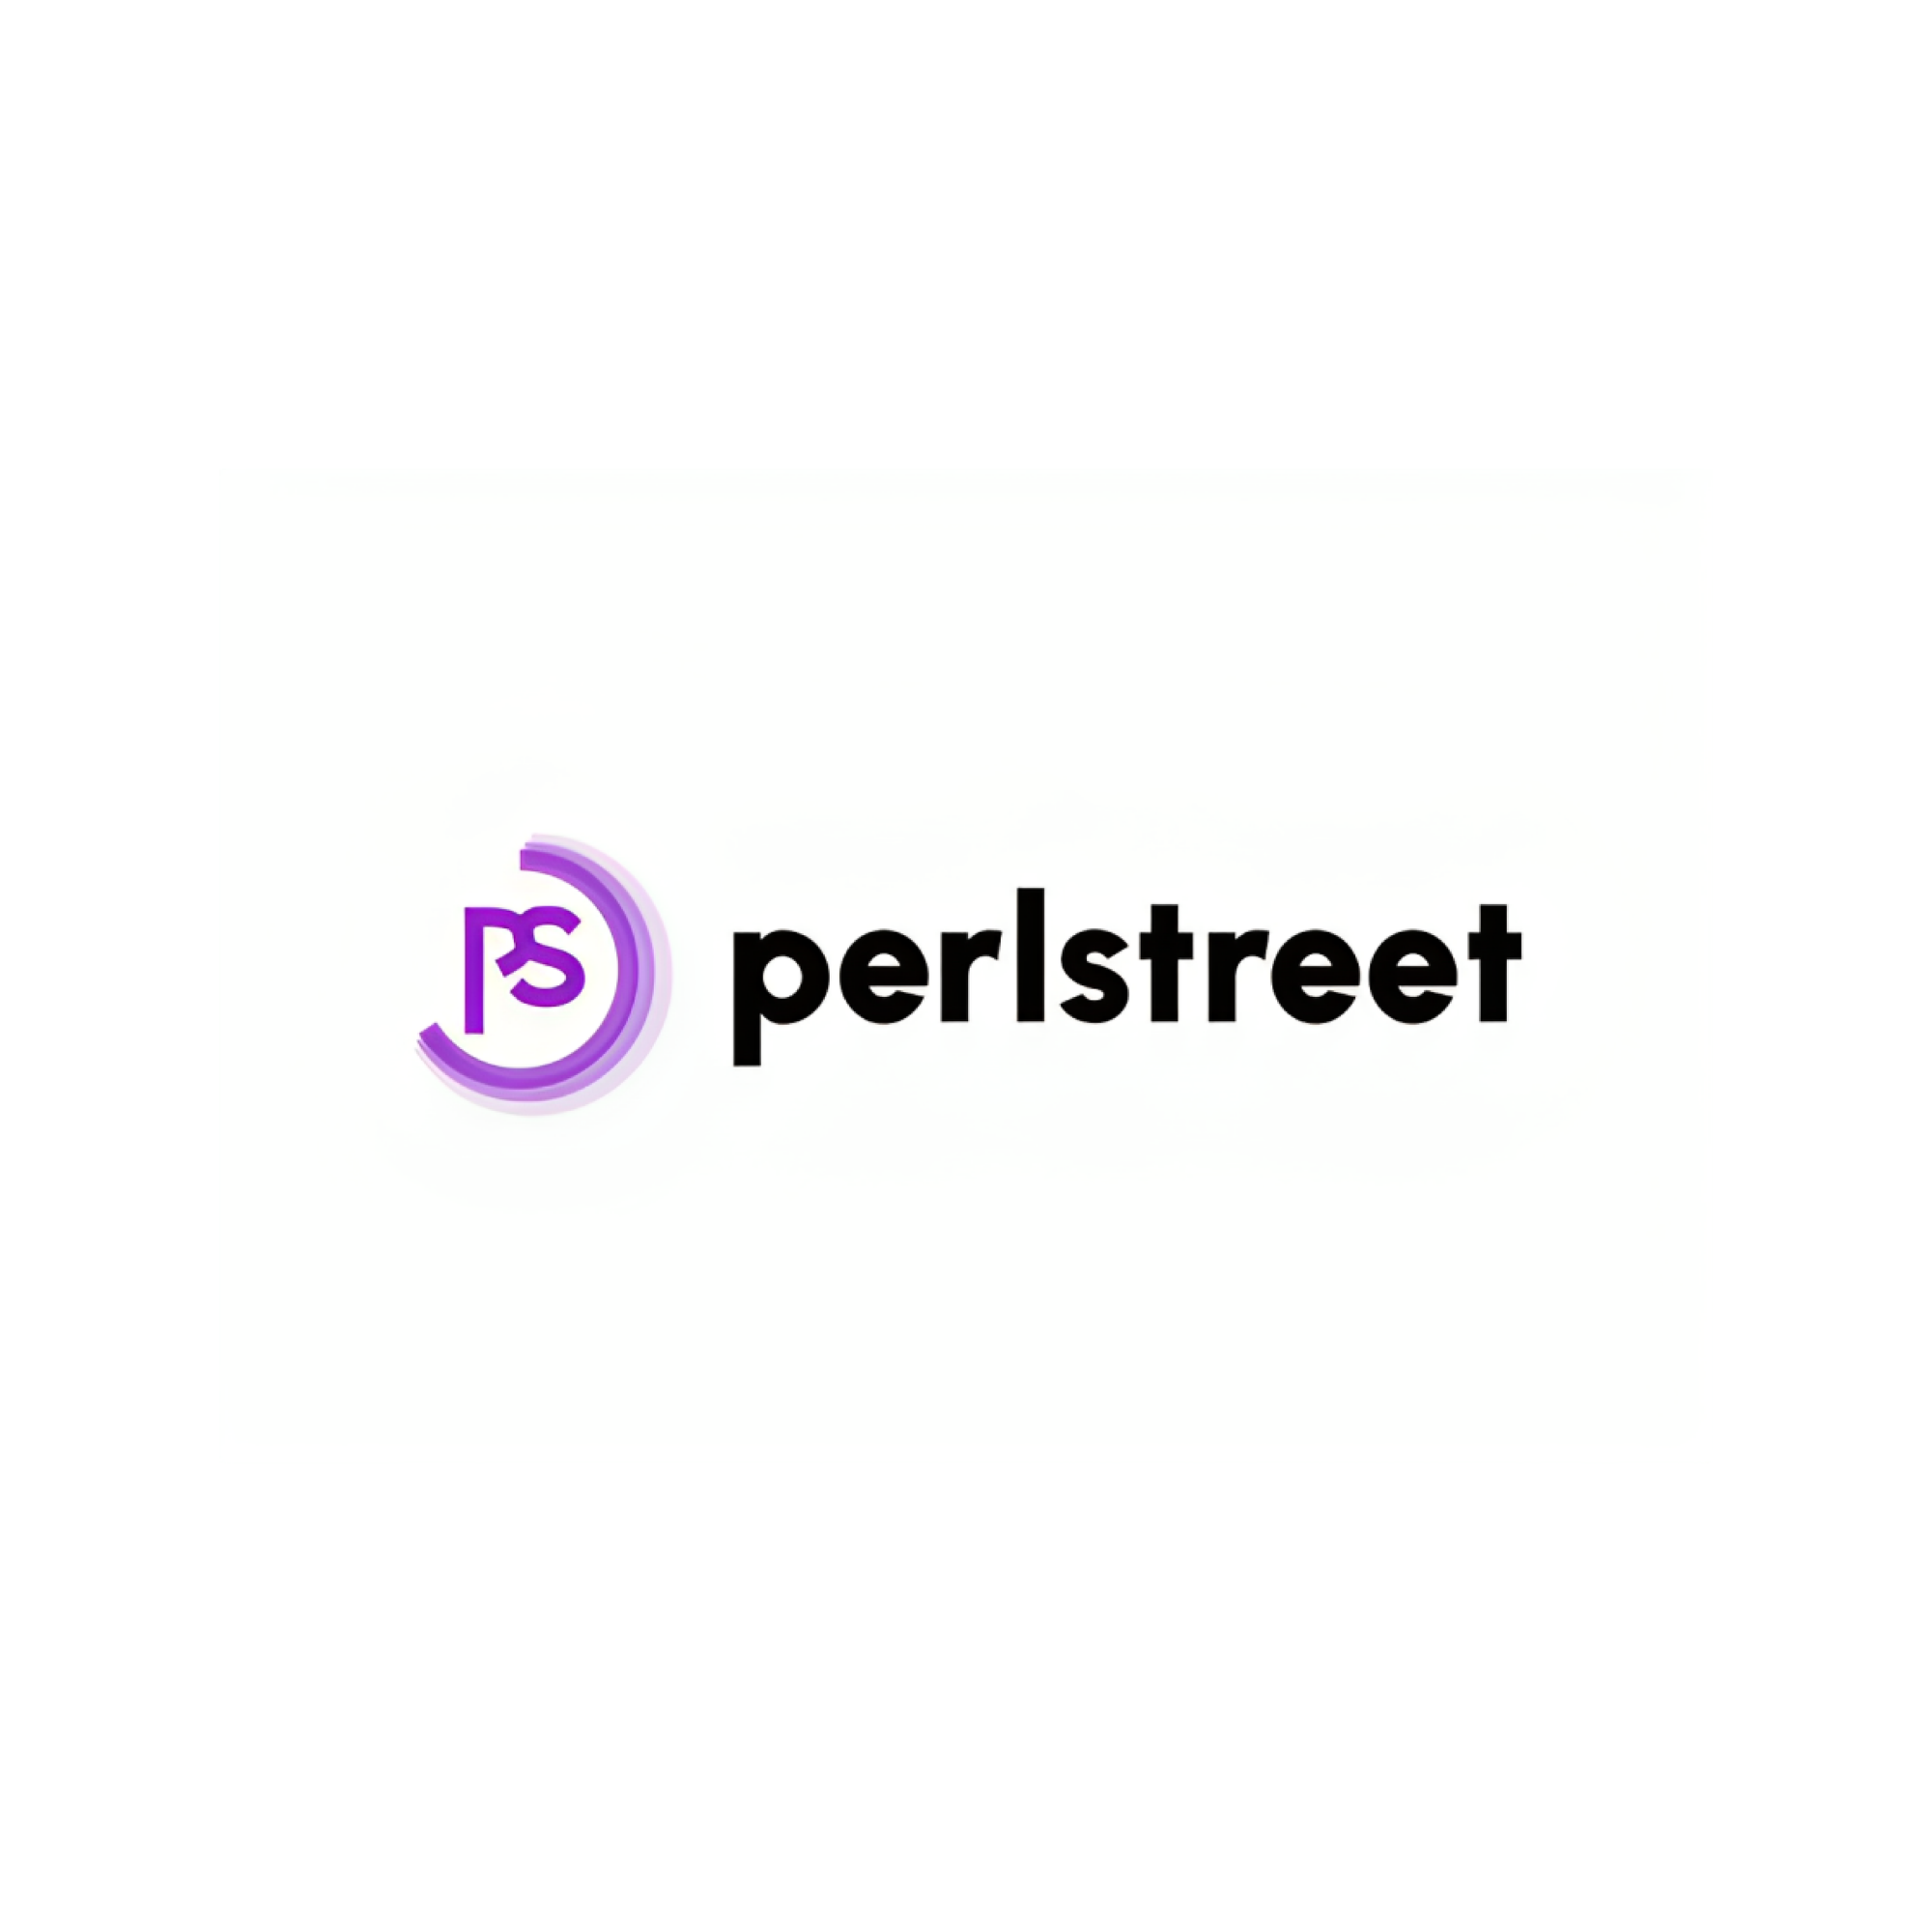 Perl Street